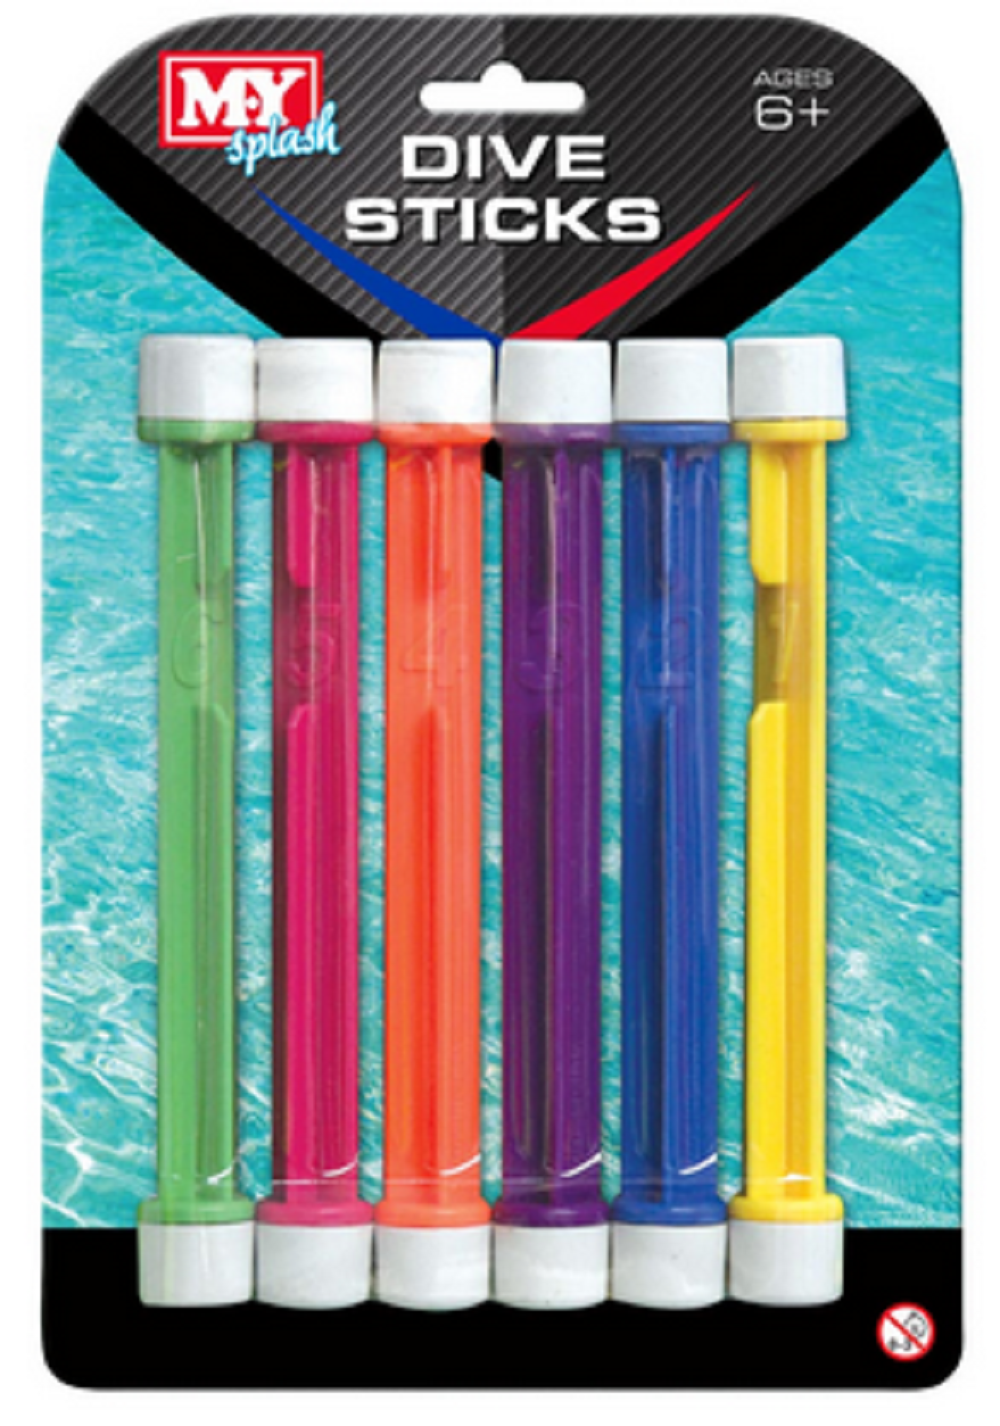 Kandytoys Dive Sticks Pack Of 6